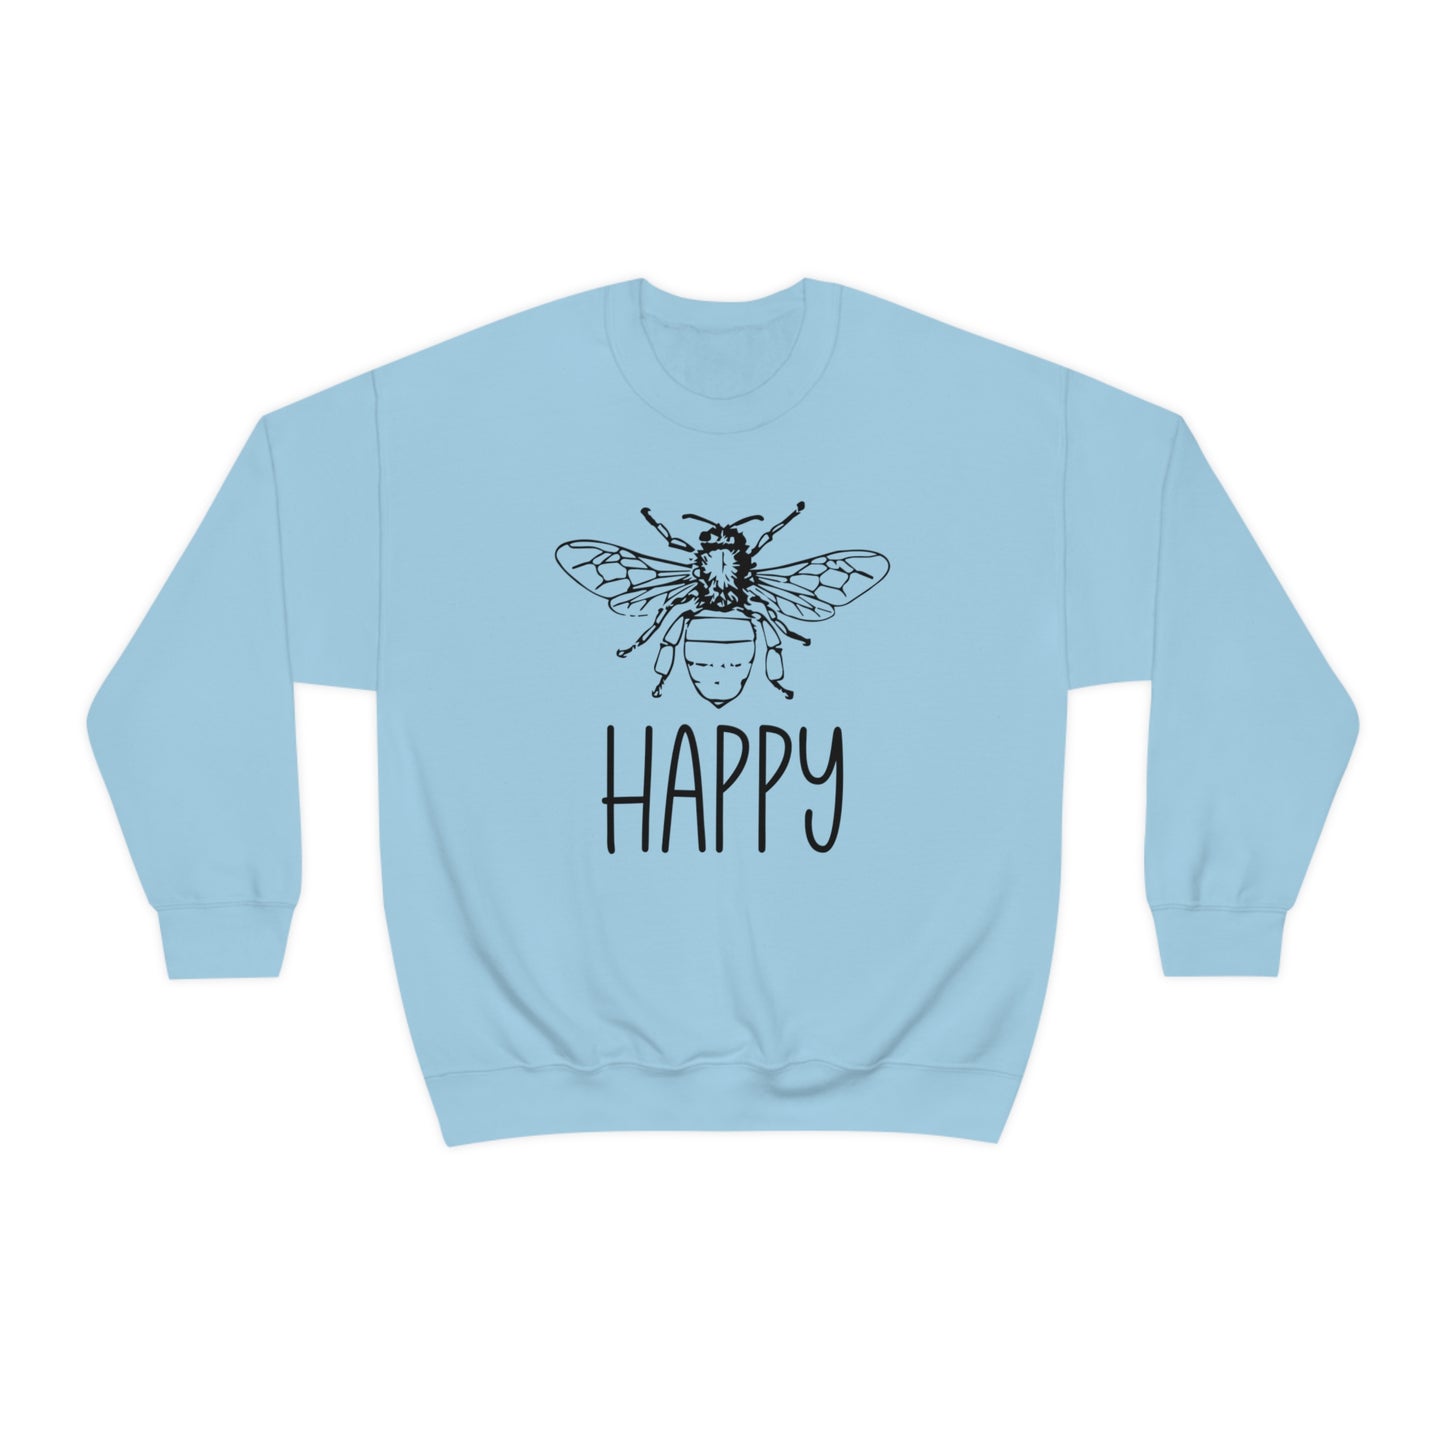 "Bee Happy" Gildan Unisex Crewneck Sweatshirt